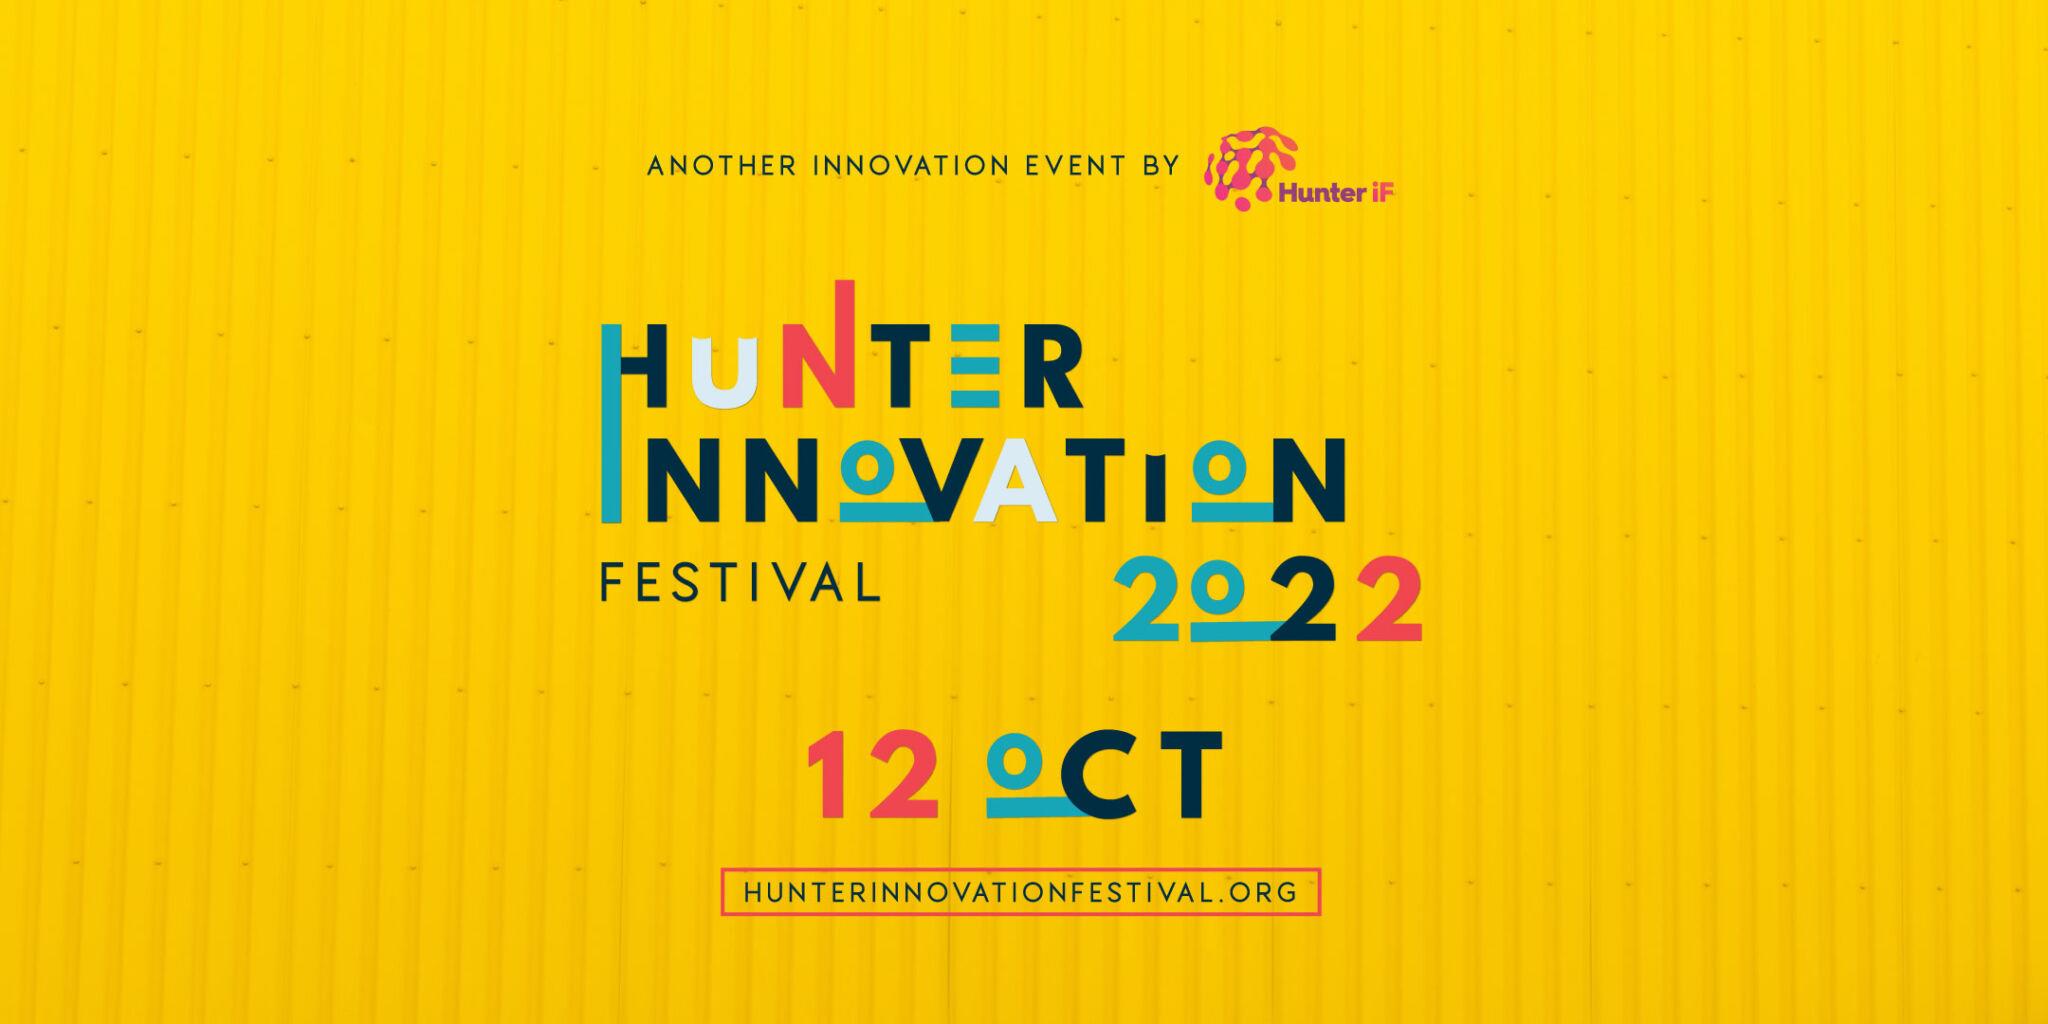 National spotlight for local innovation Hunter iF